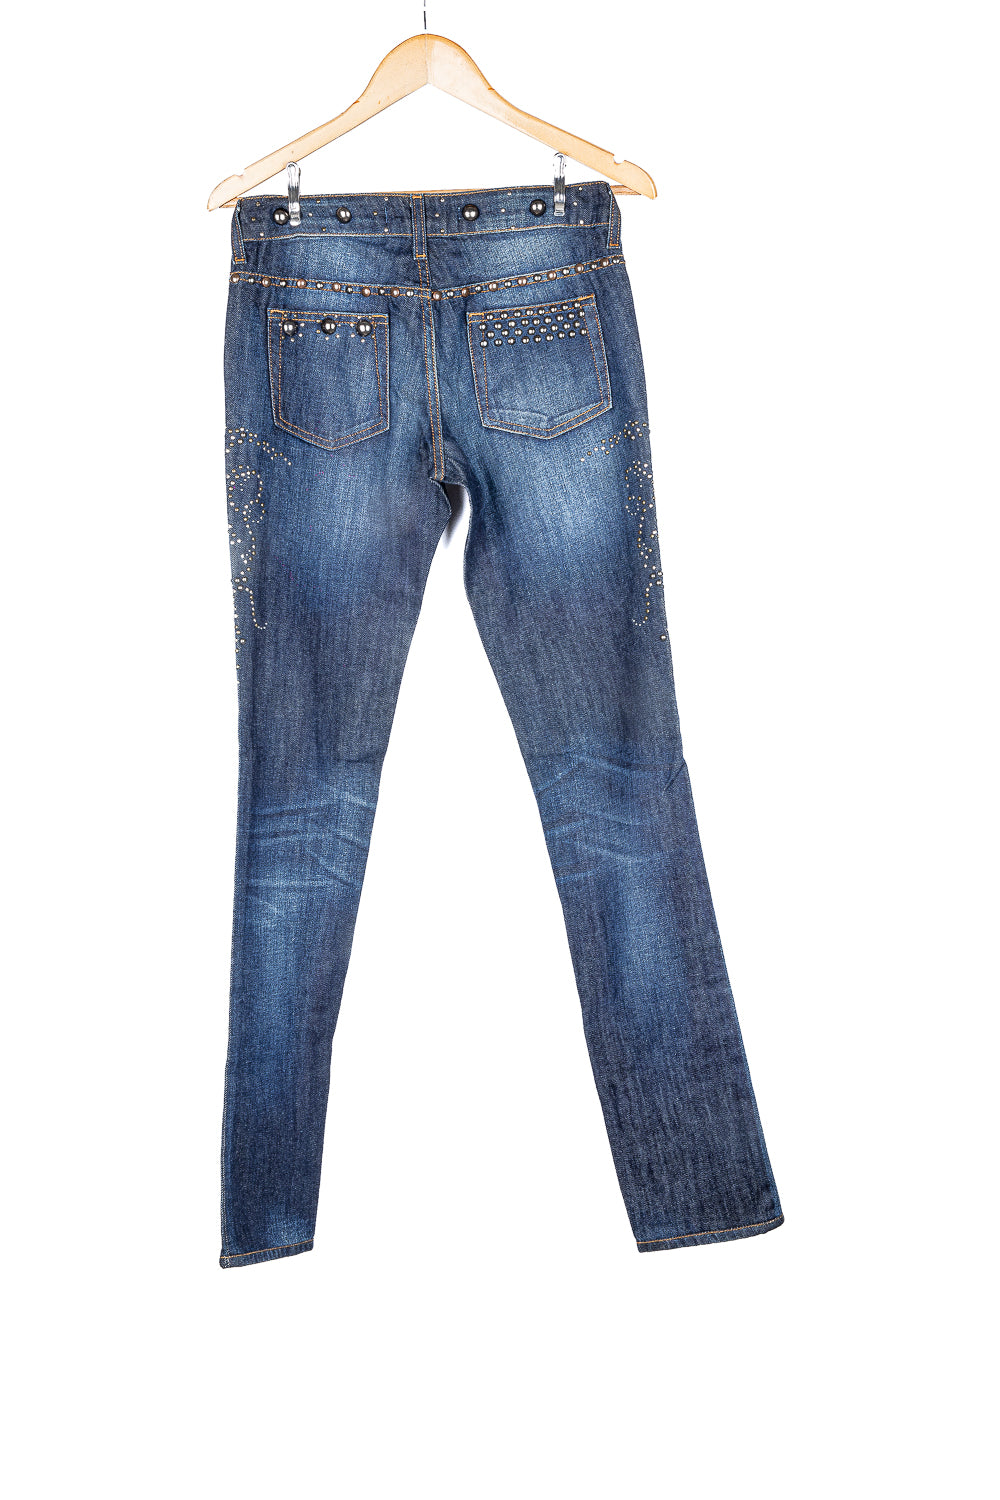 Indigo Blue Denim Tapered Jeans